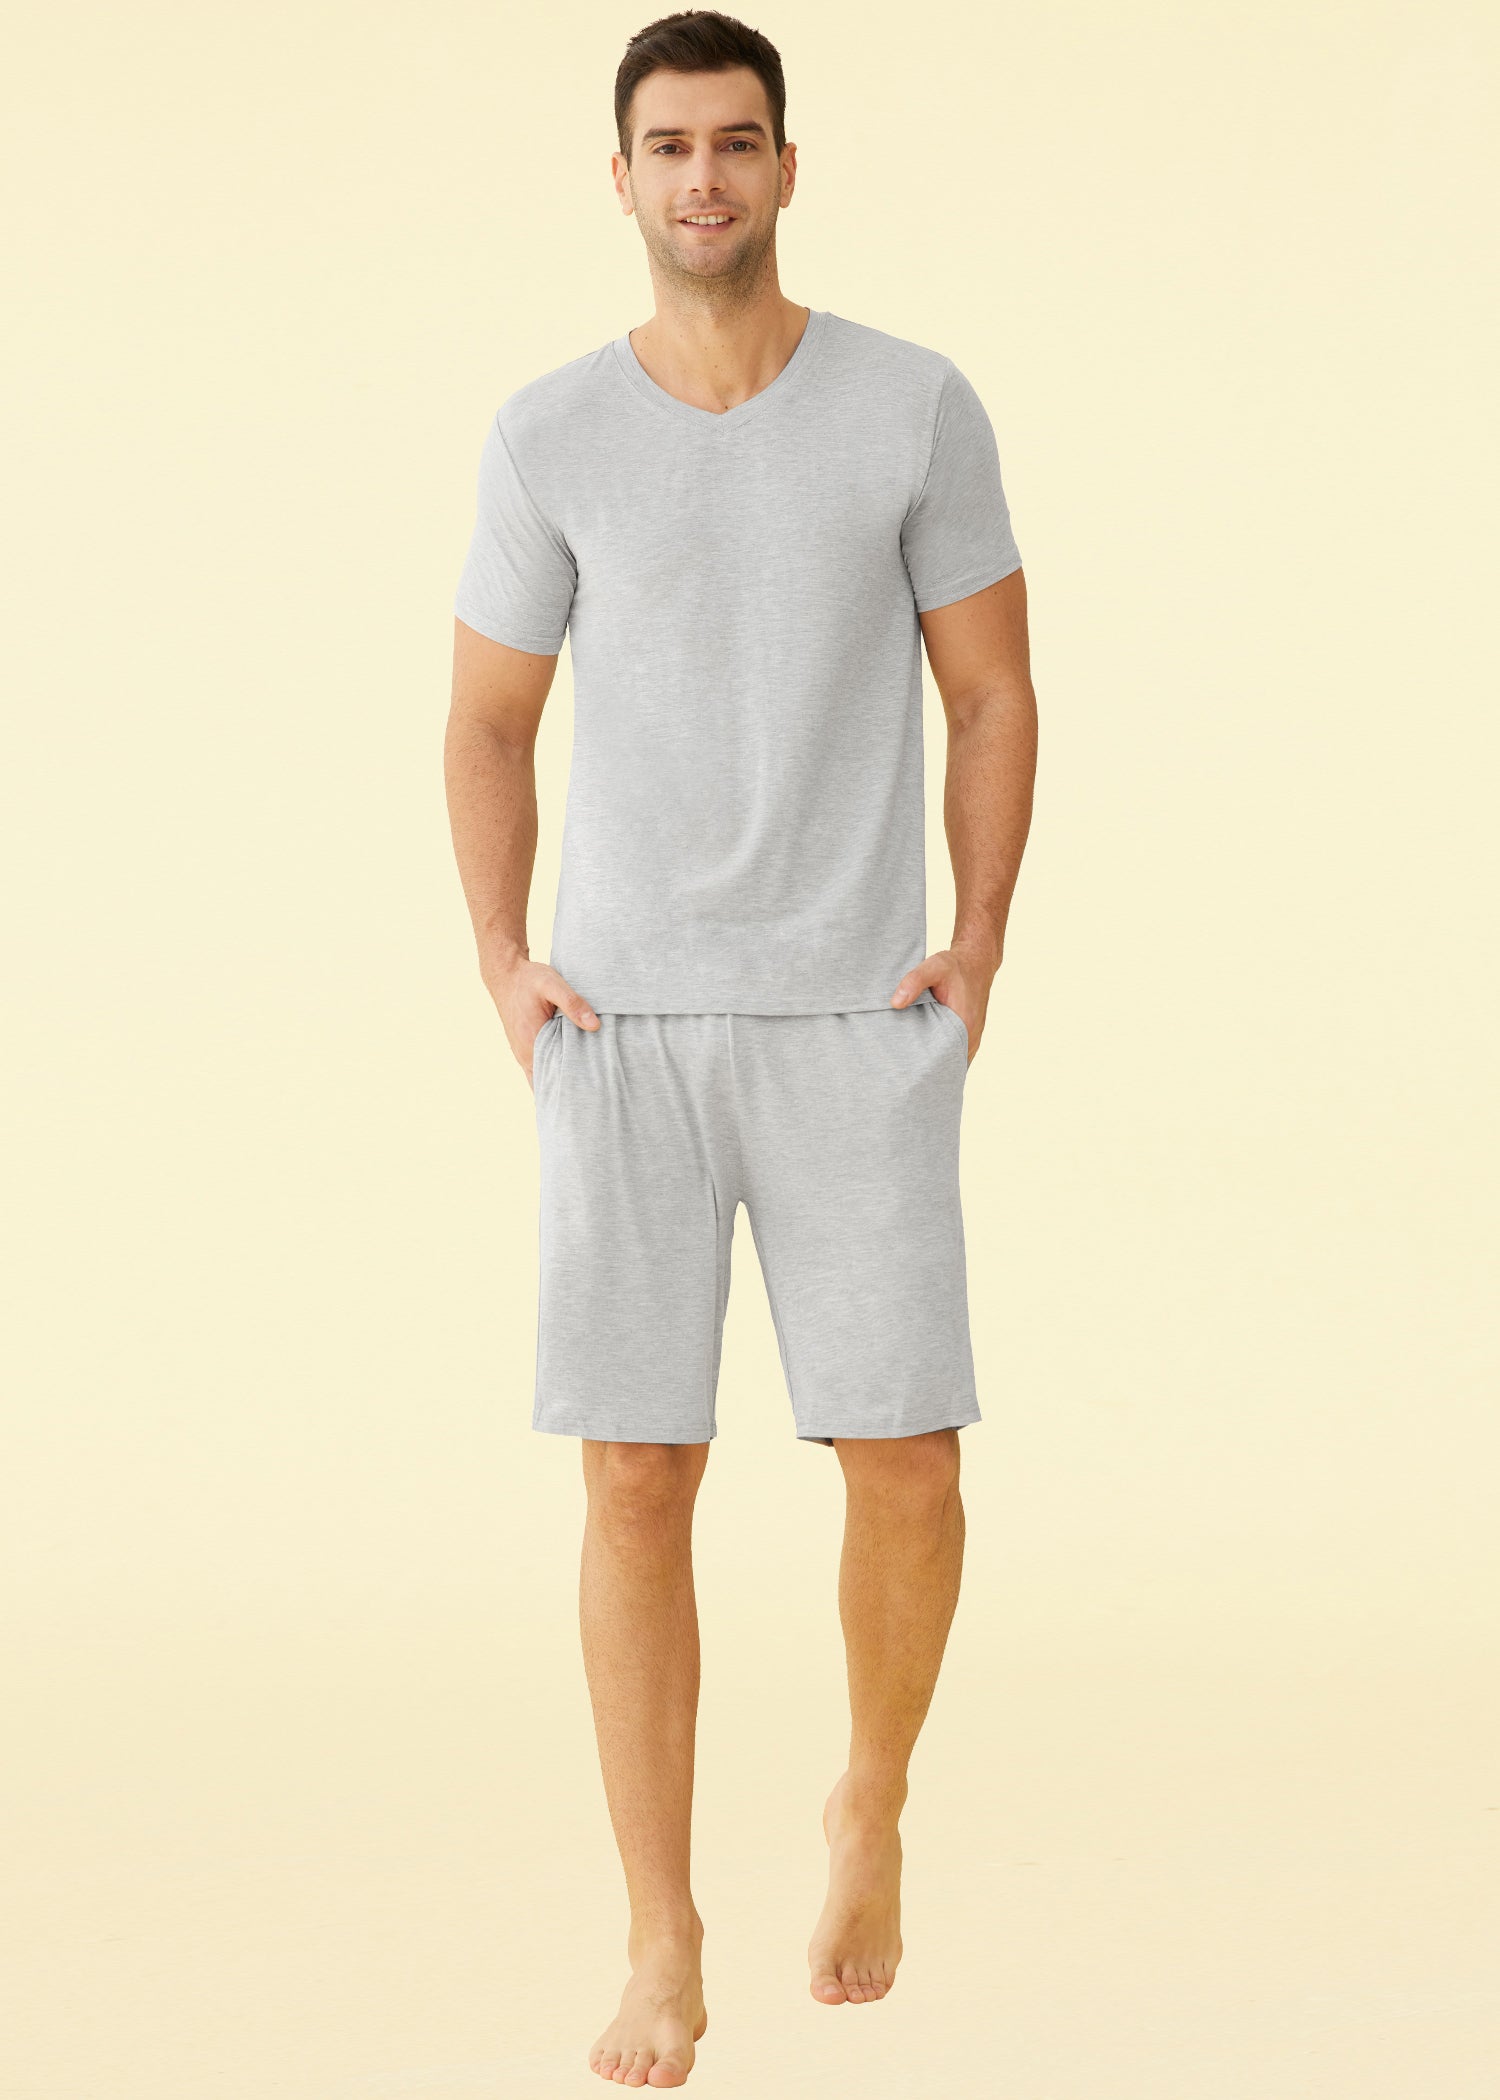 Latuza Men's Cotton Pajama Lounge Shorts with Pockets XL Navy at